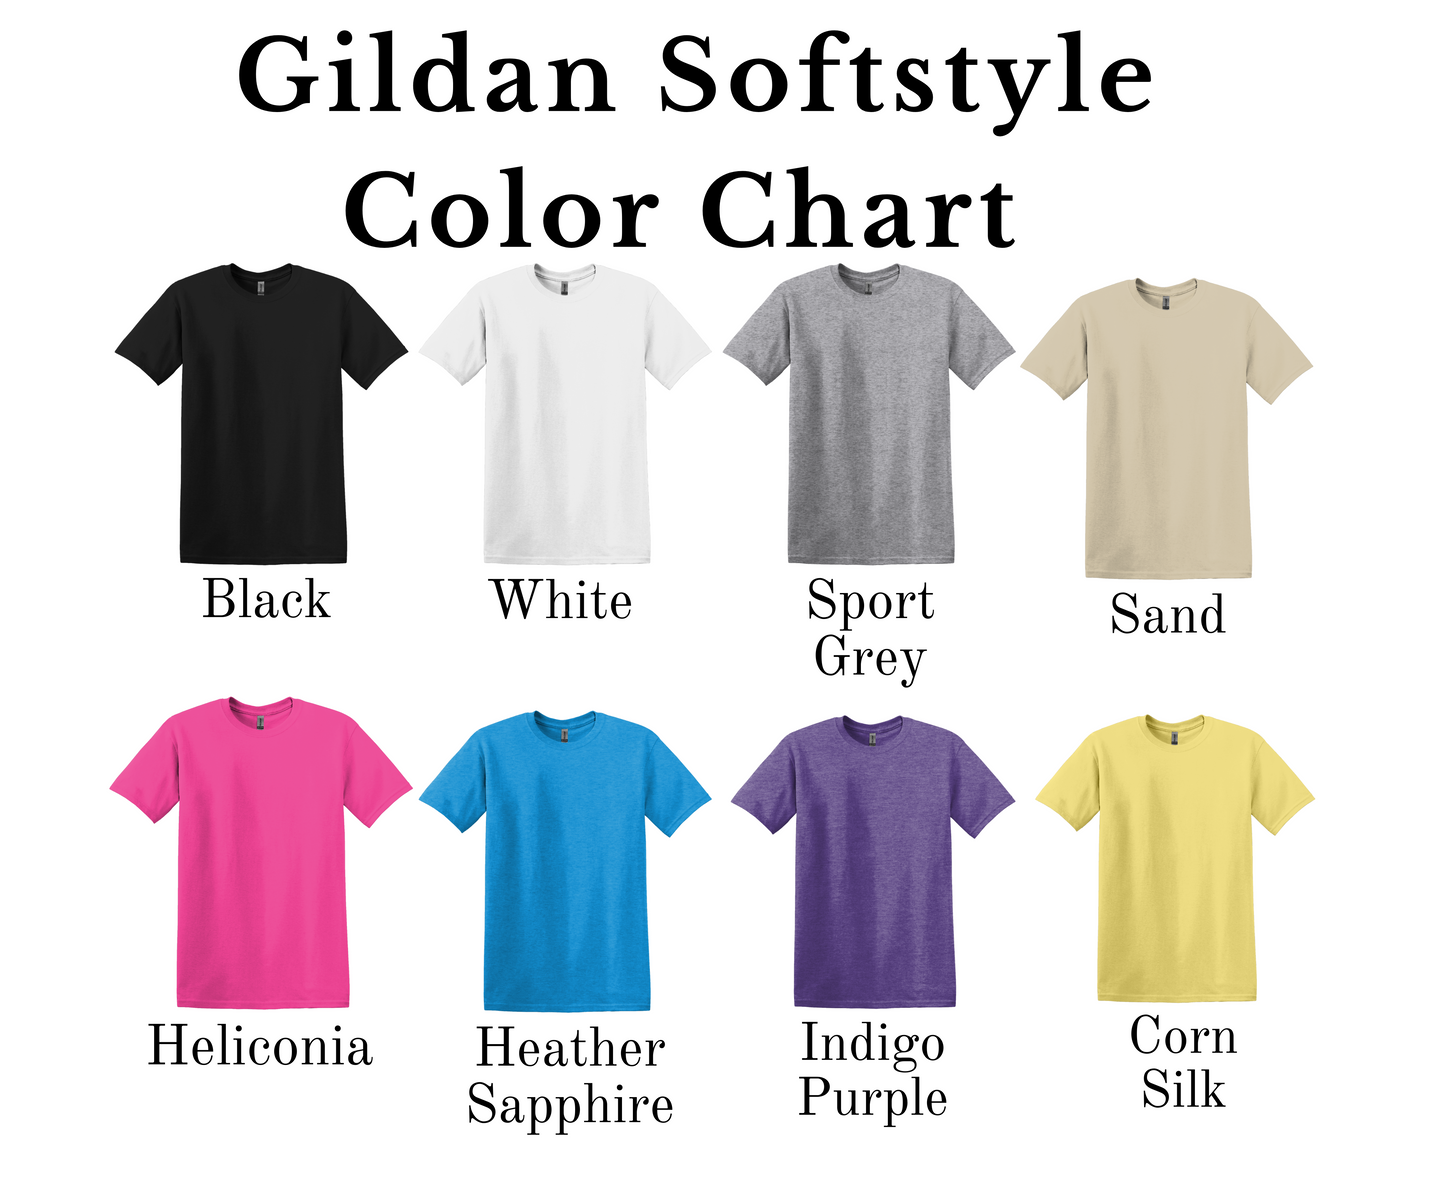 Anatomy of the Heart Gildan Sofstyle T-shirt